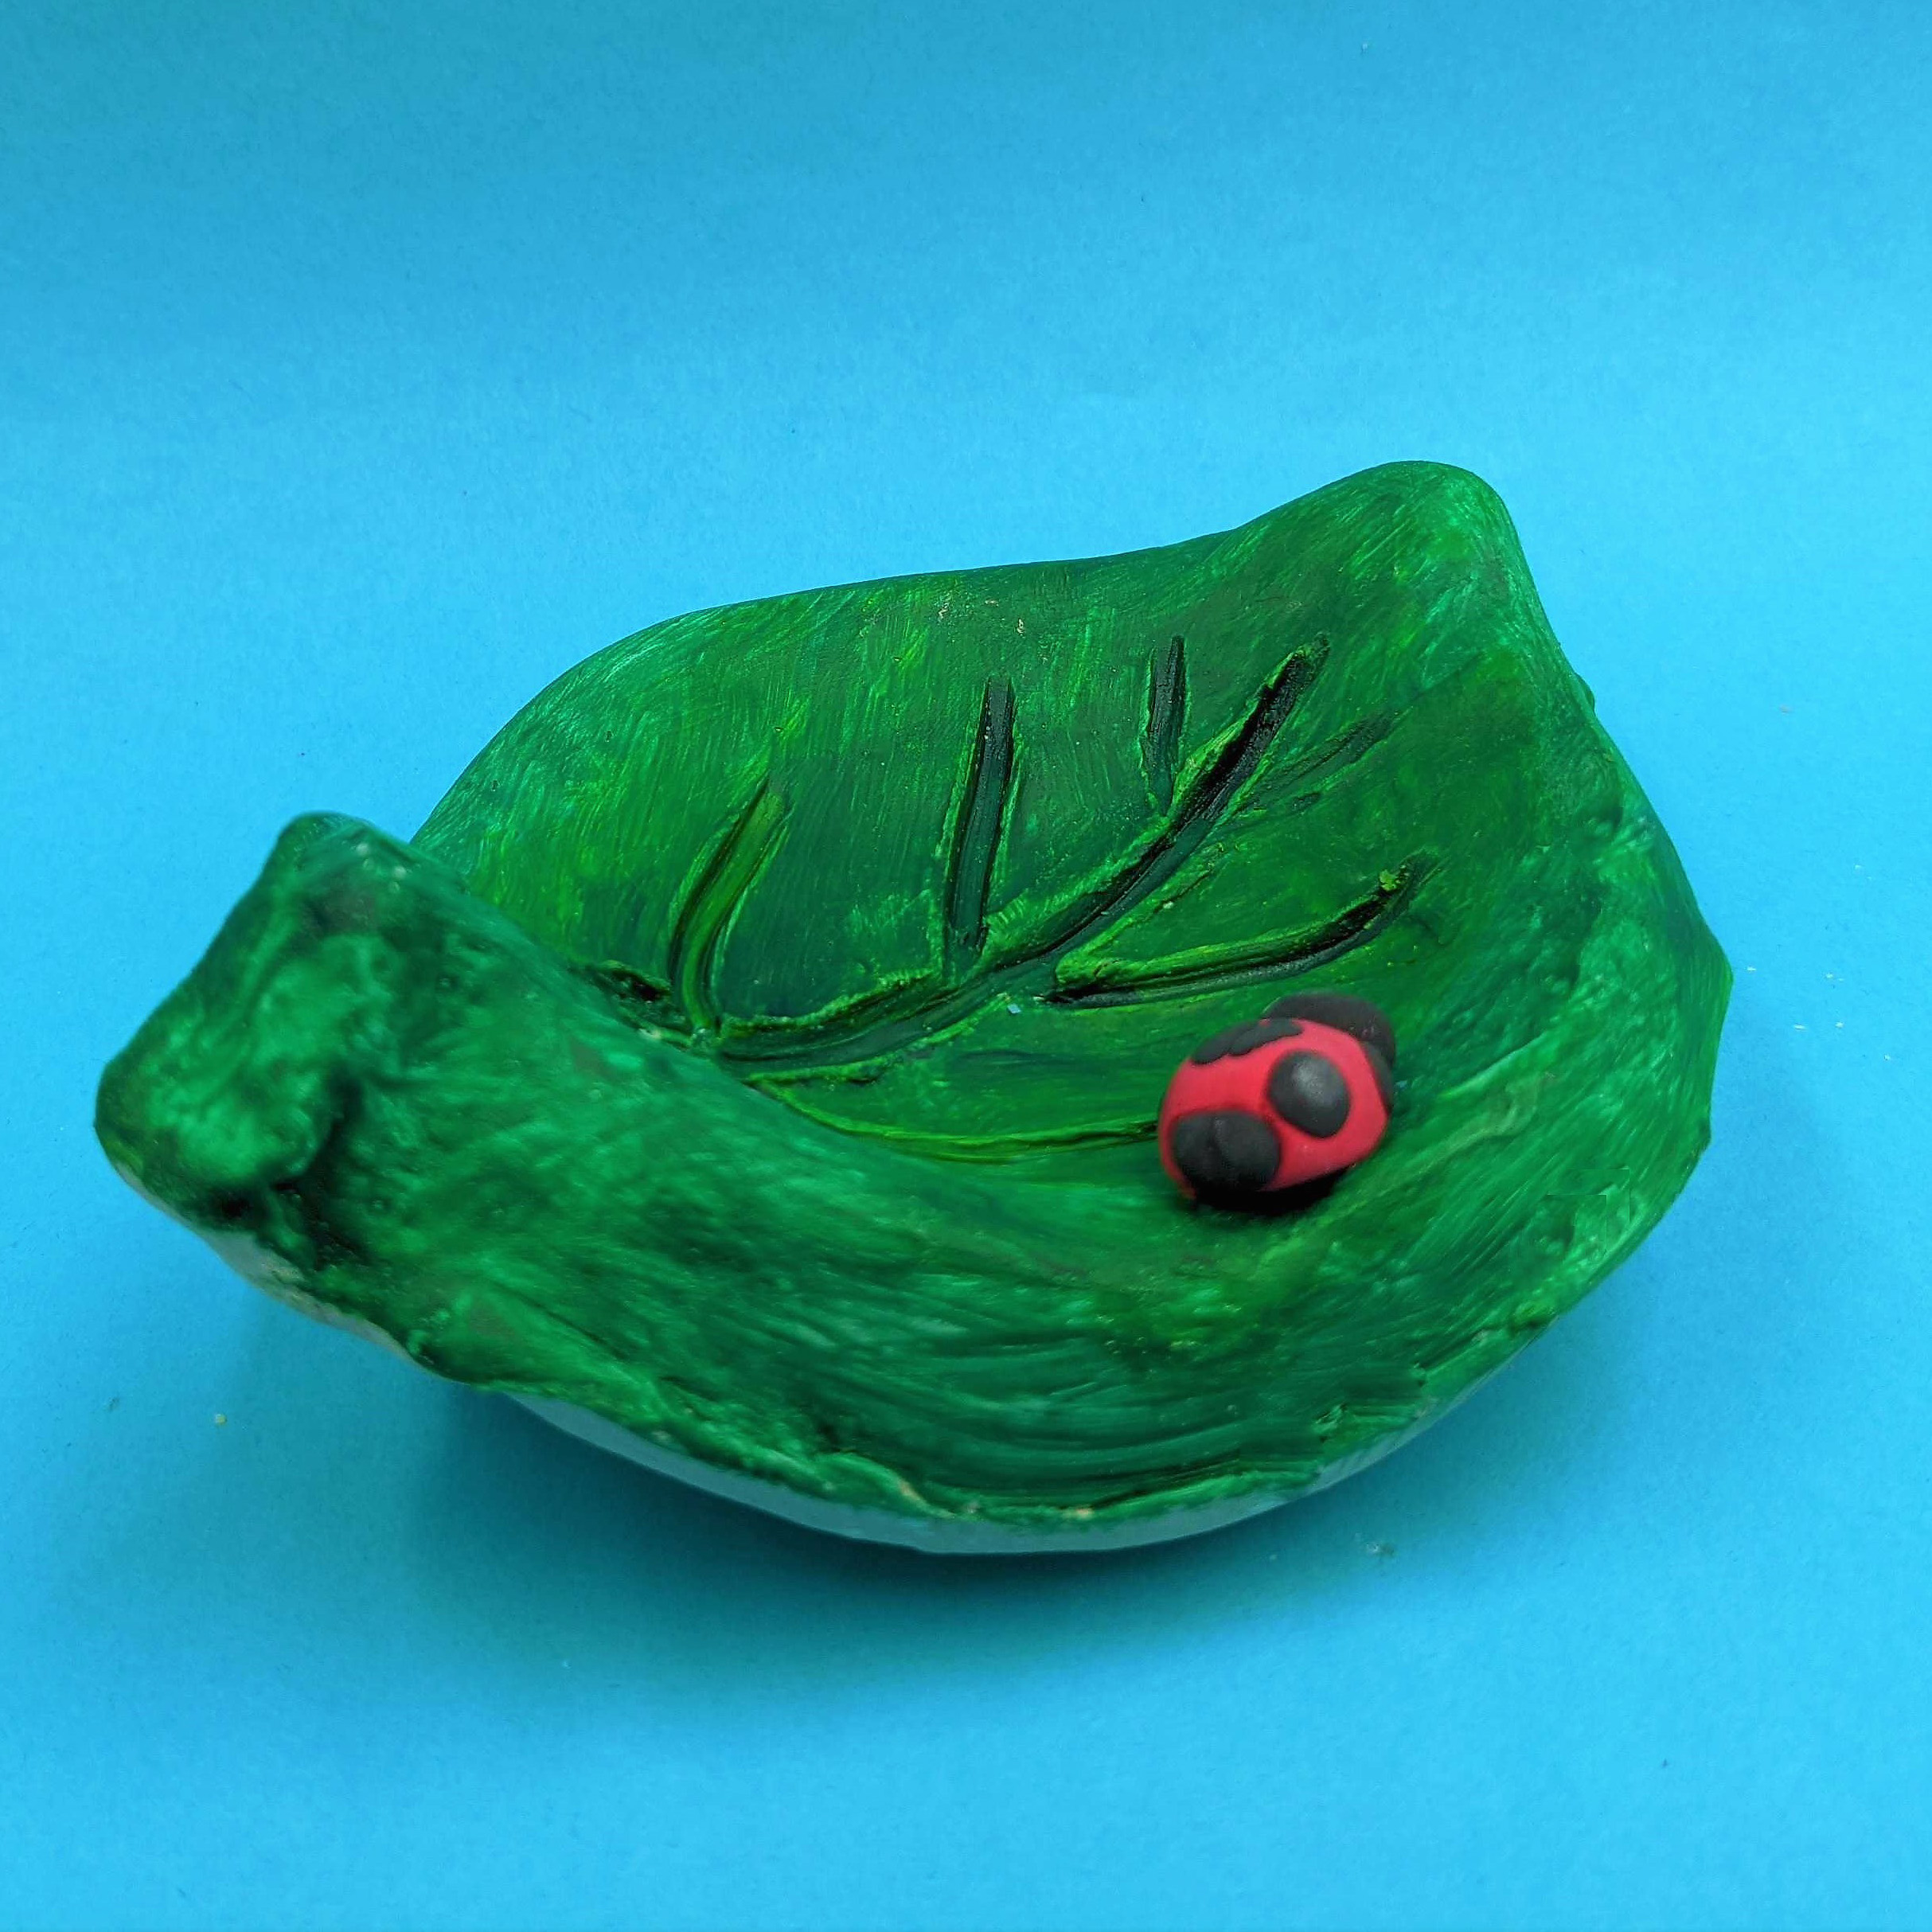 Kidcreate Studio - Ashburn, Leaf bowl Art Project